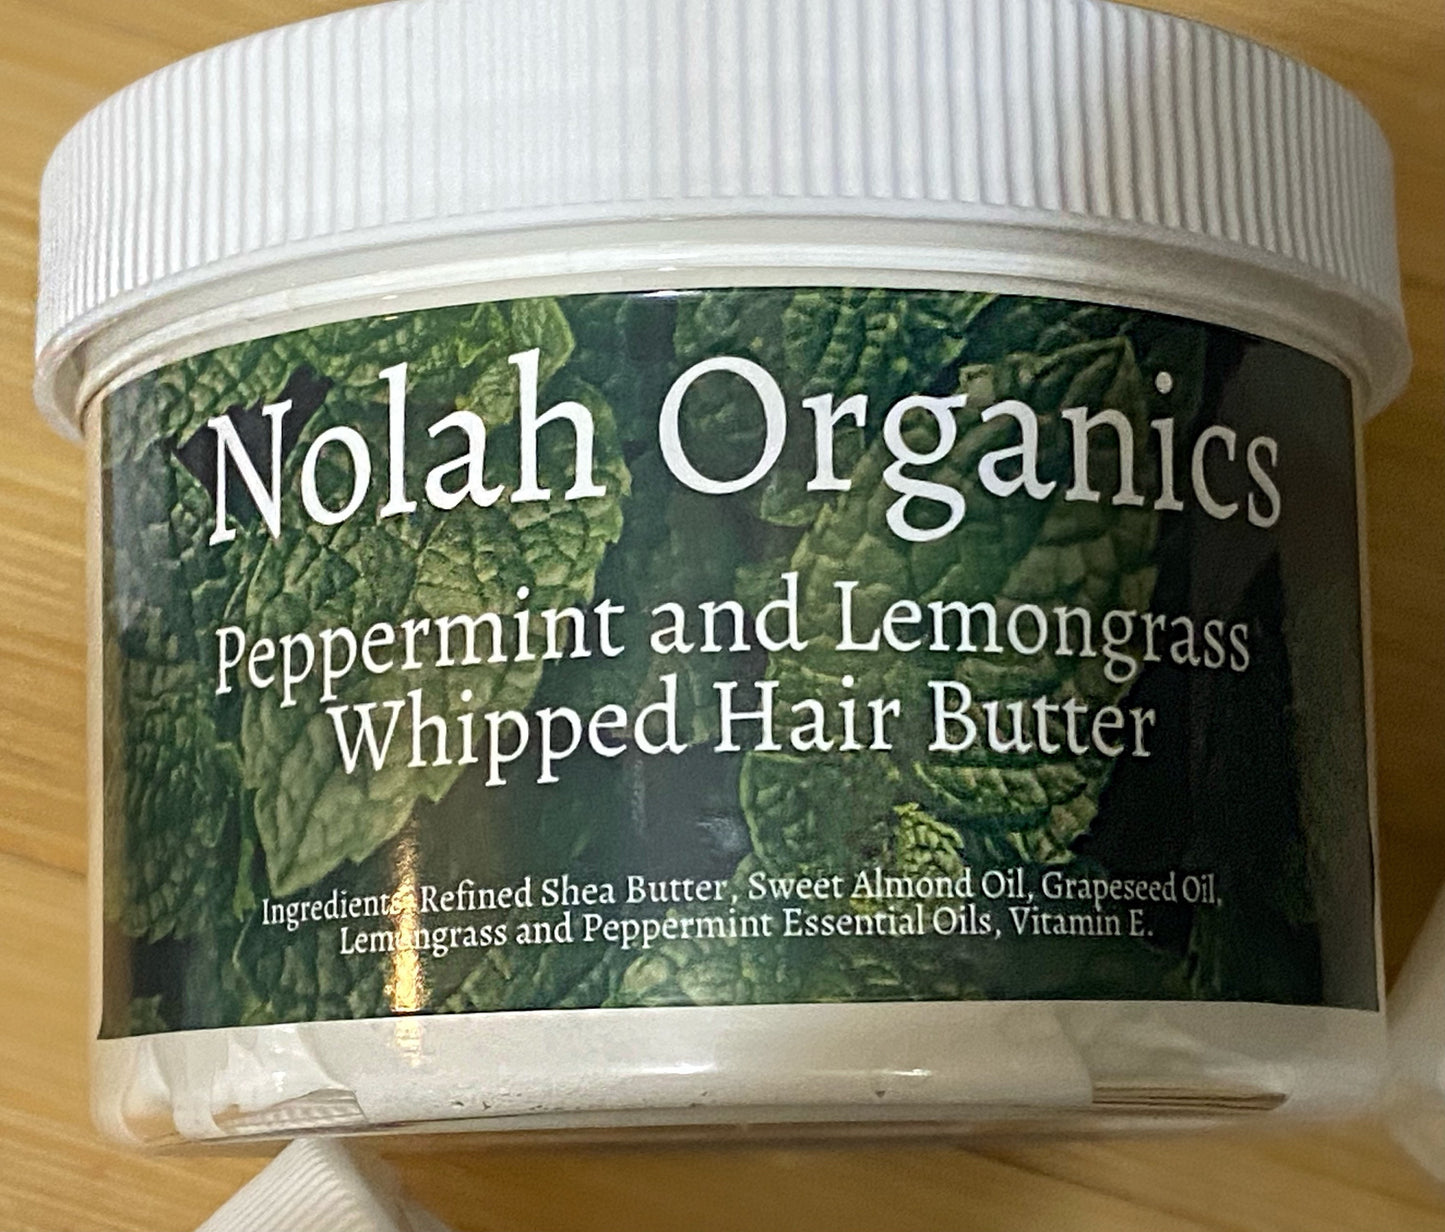 Peppermint and Lemongrass Whipped Hair Butter